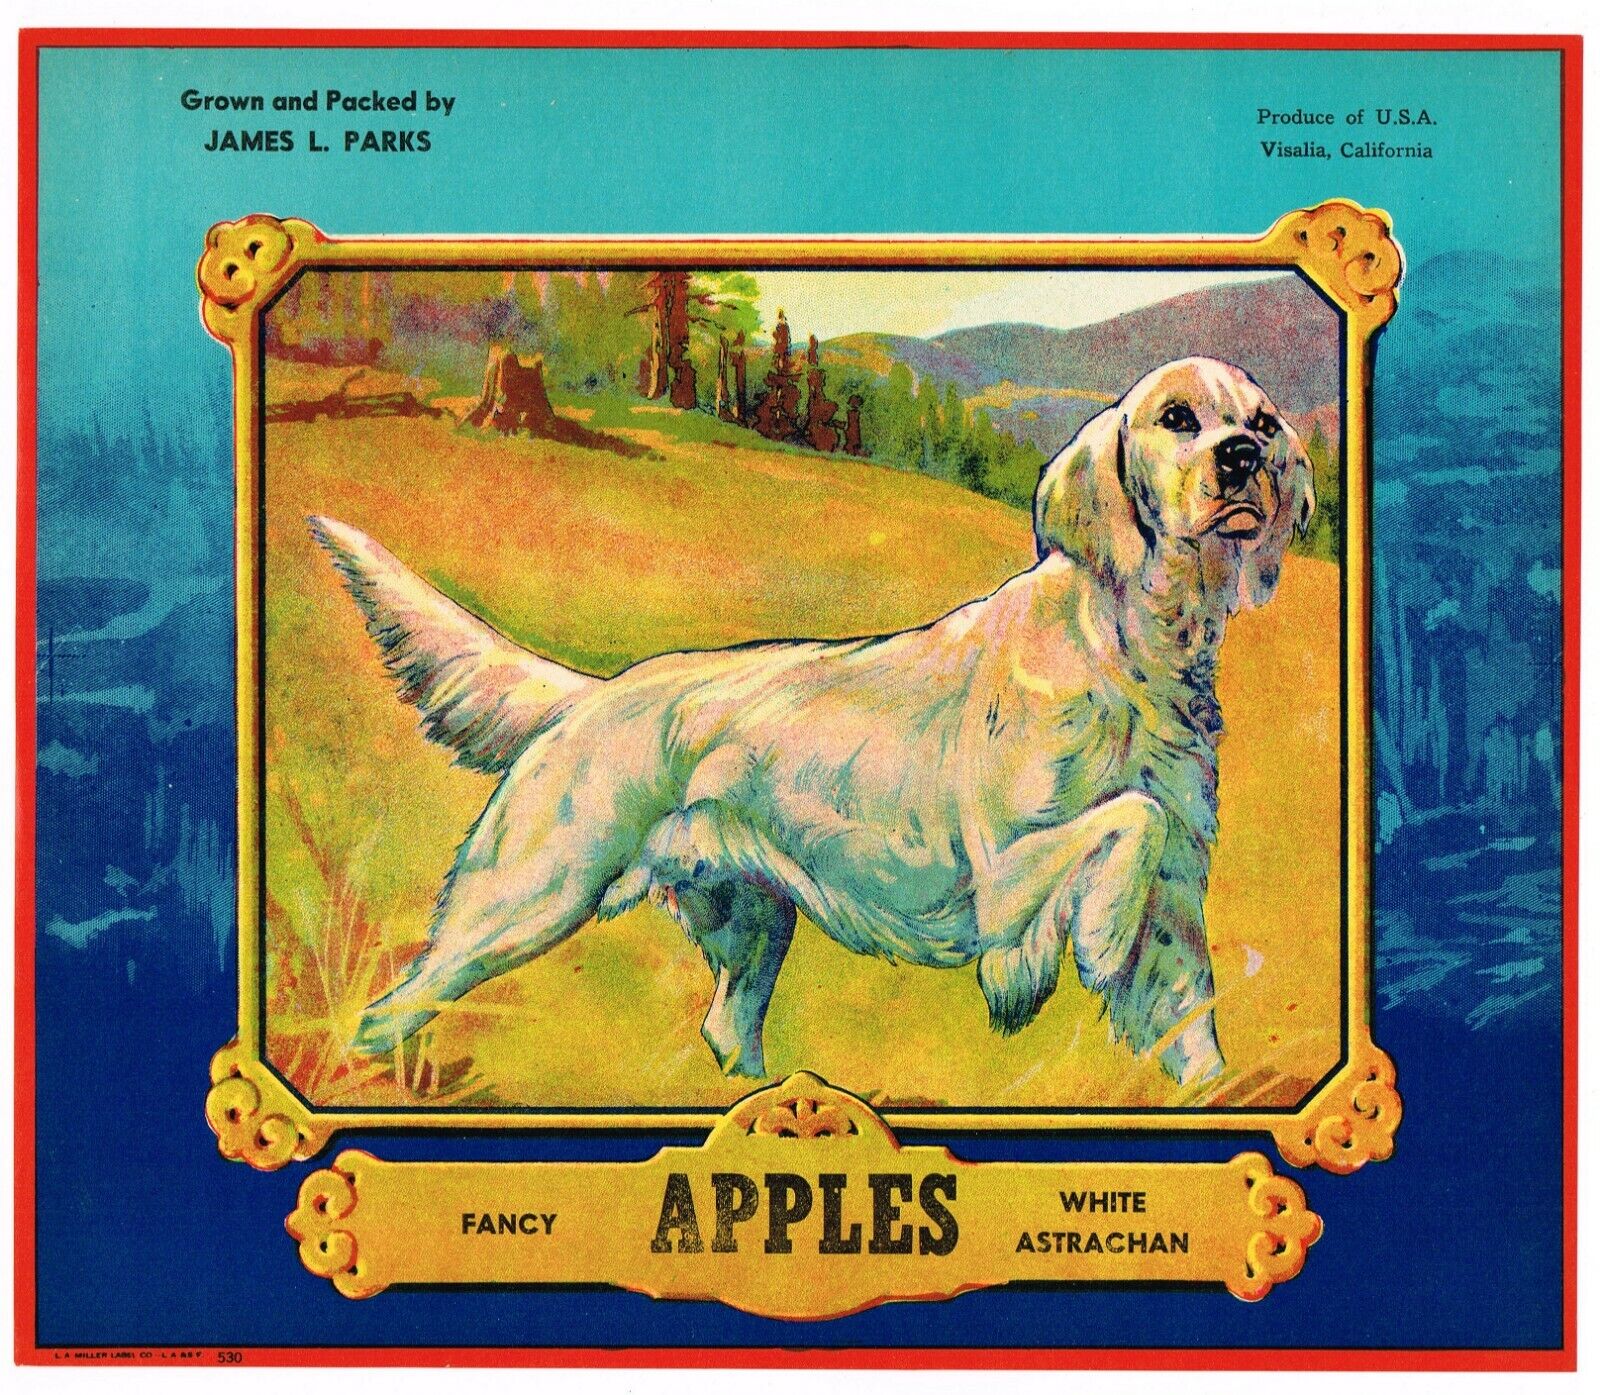 ORIGINAL APPLE CRATE LABEL VINTAGE RETRIEVER DOG VISALIA SCARCE ADVERTISING 1935